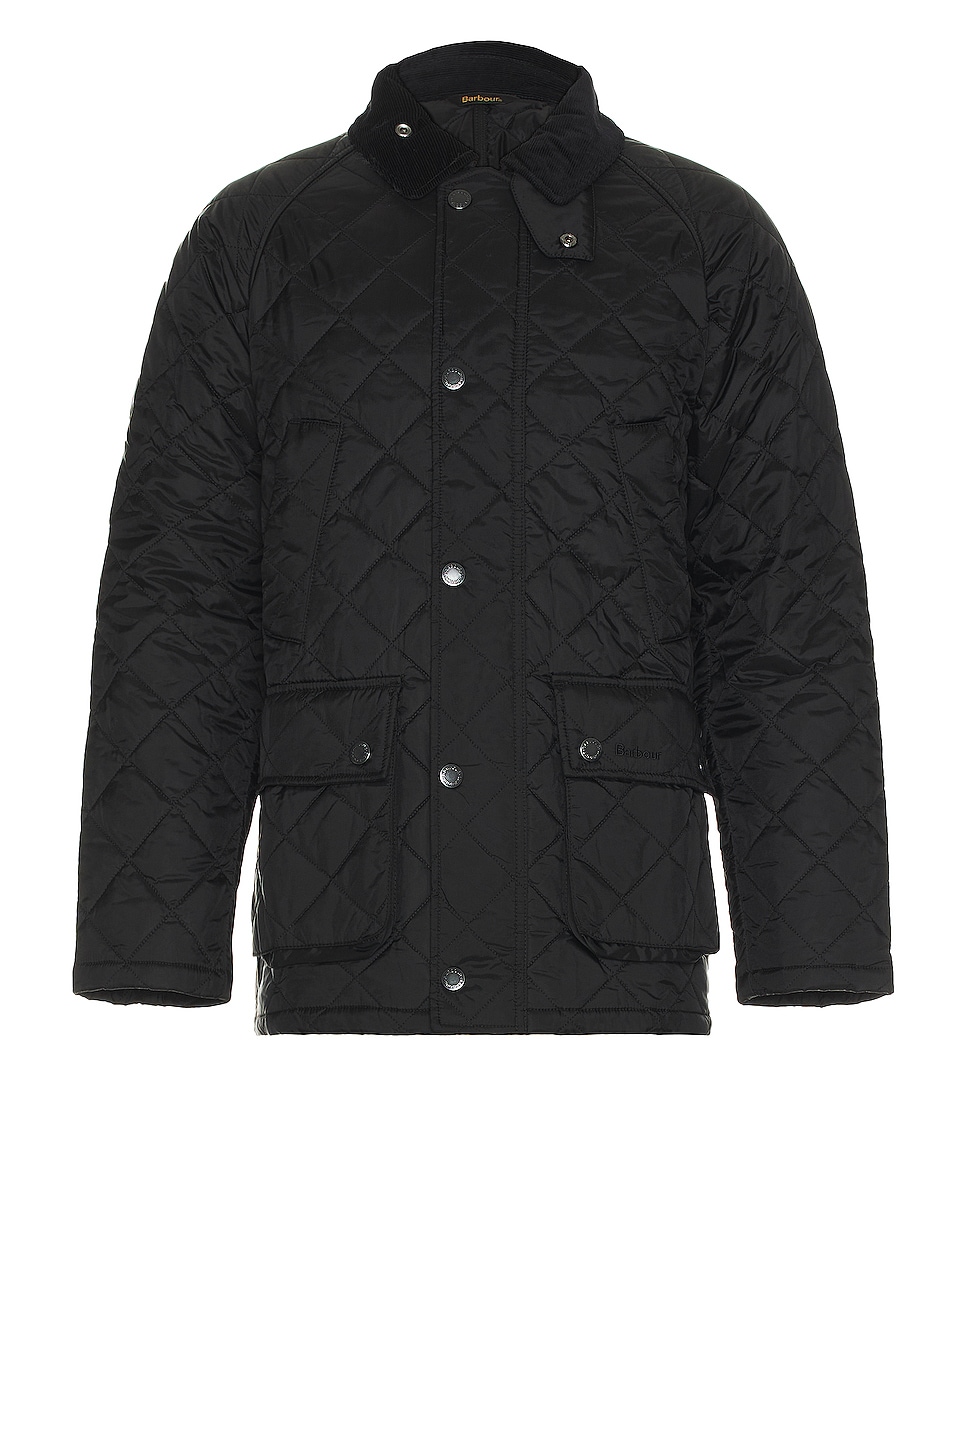 Image 1 of Barbour Ashby Quilt Jacket in Black